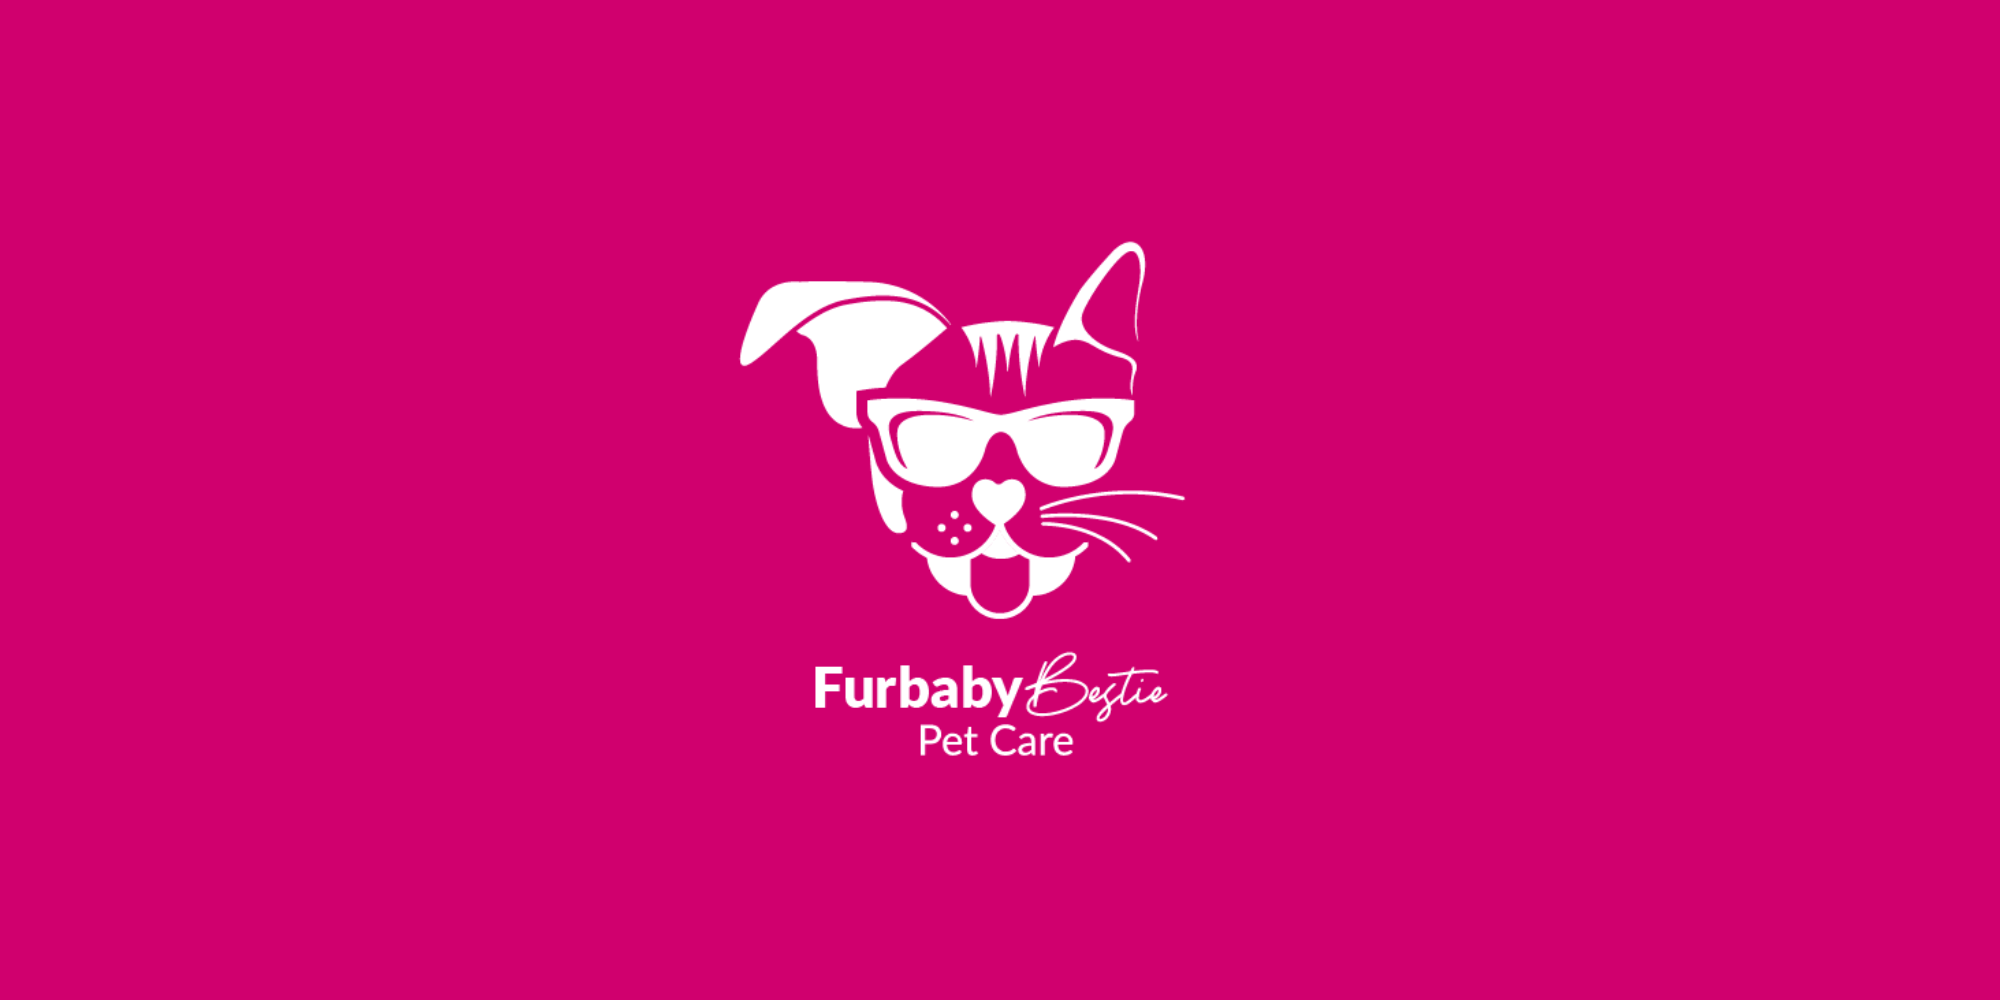 furbaby-bestie-pet-care-summary.png